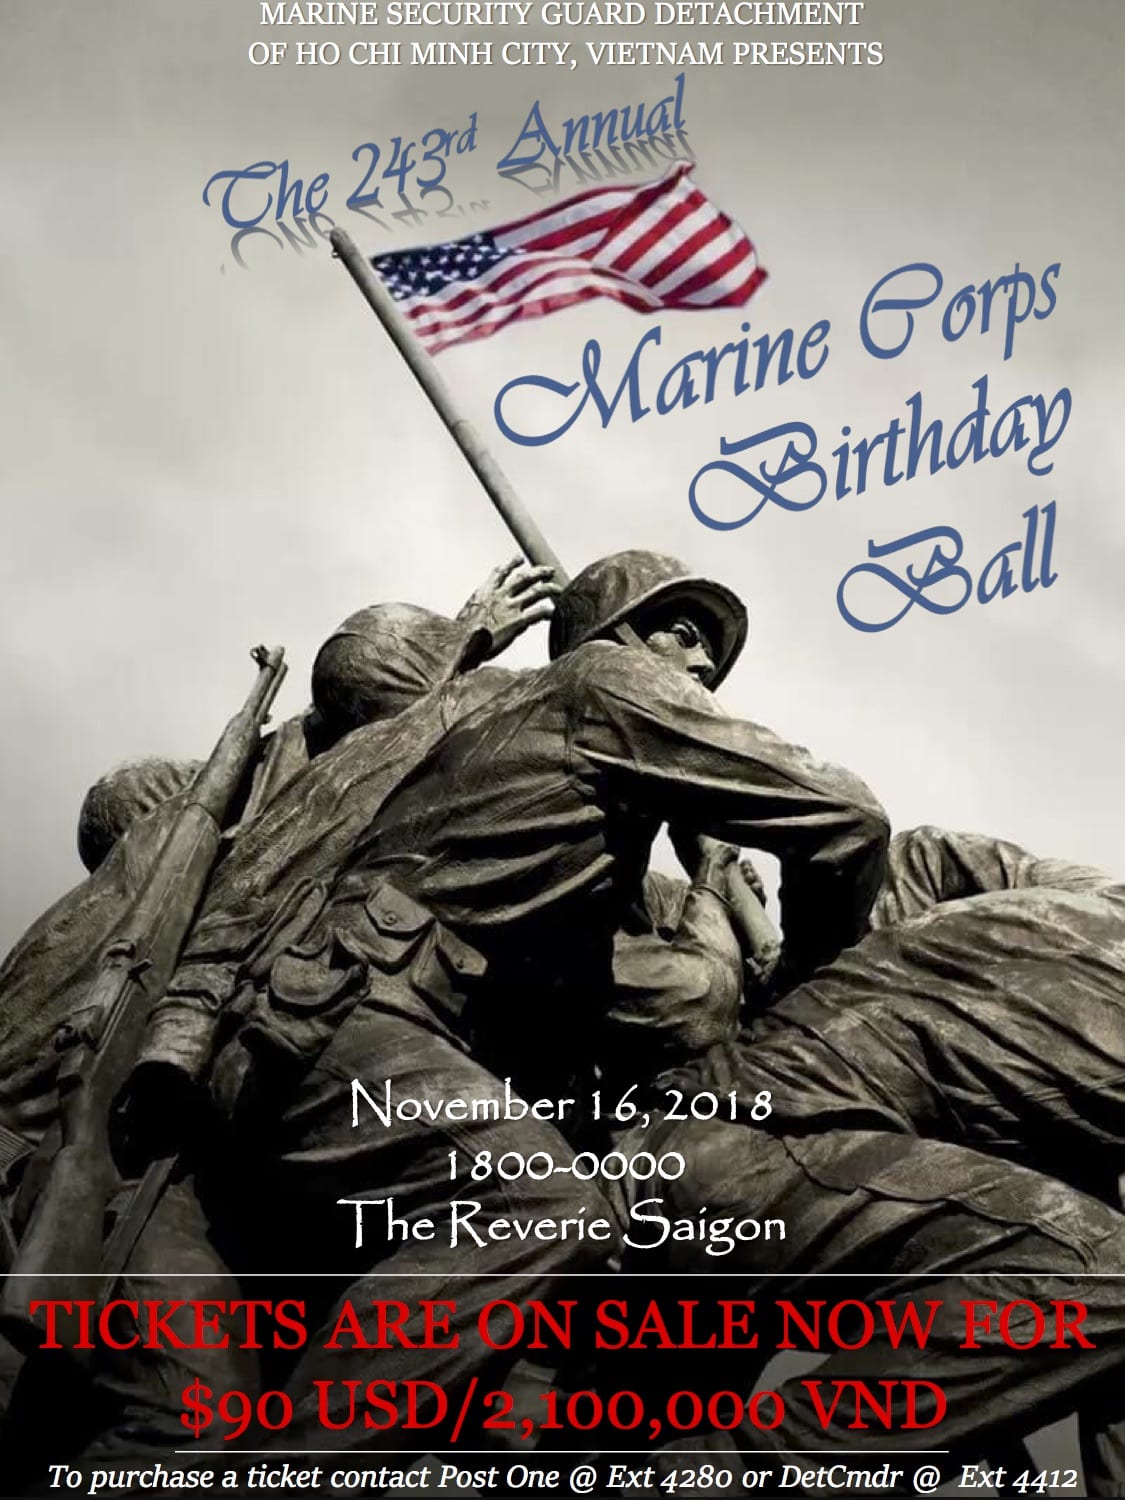 The 243rd Marine Corps Birthday Ball